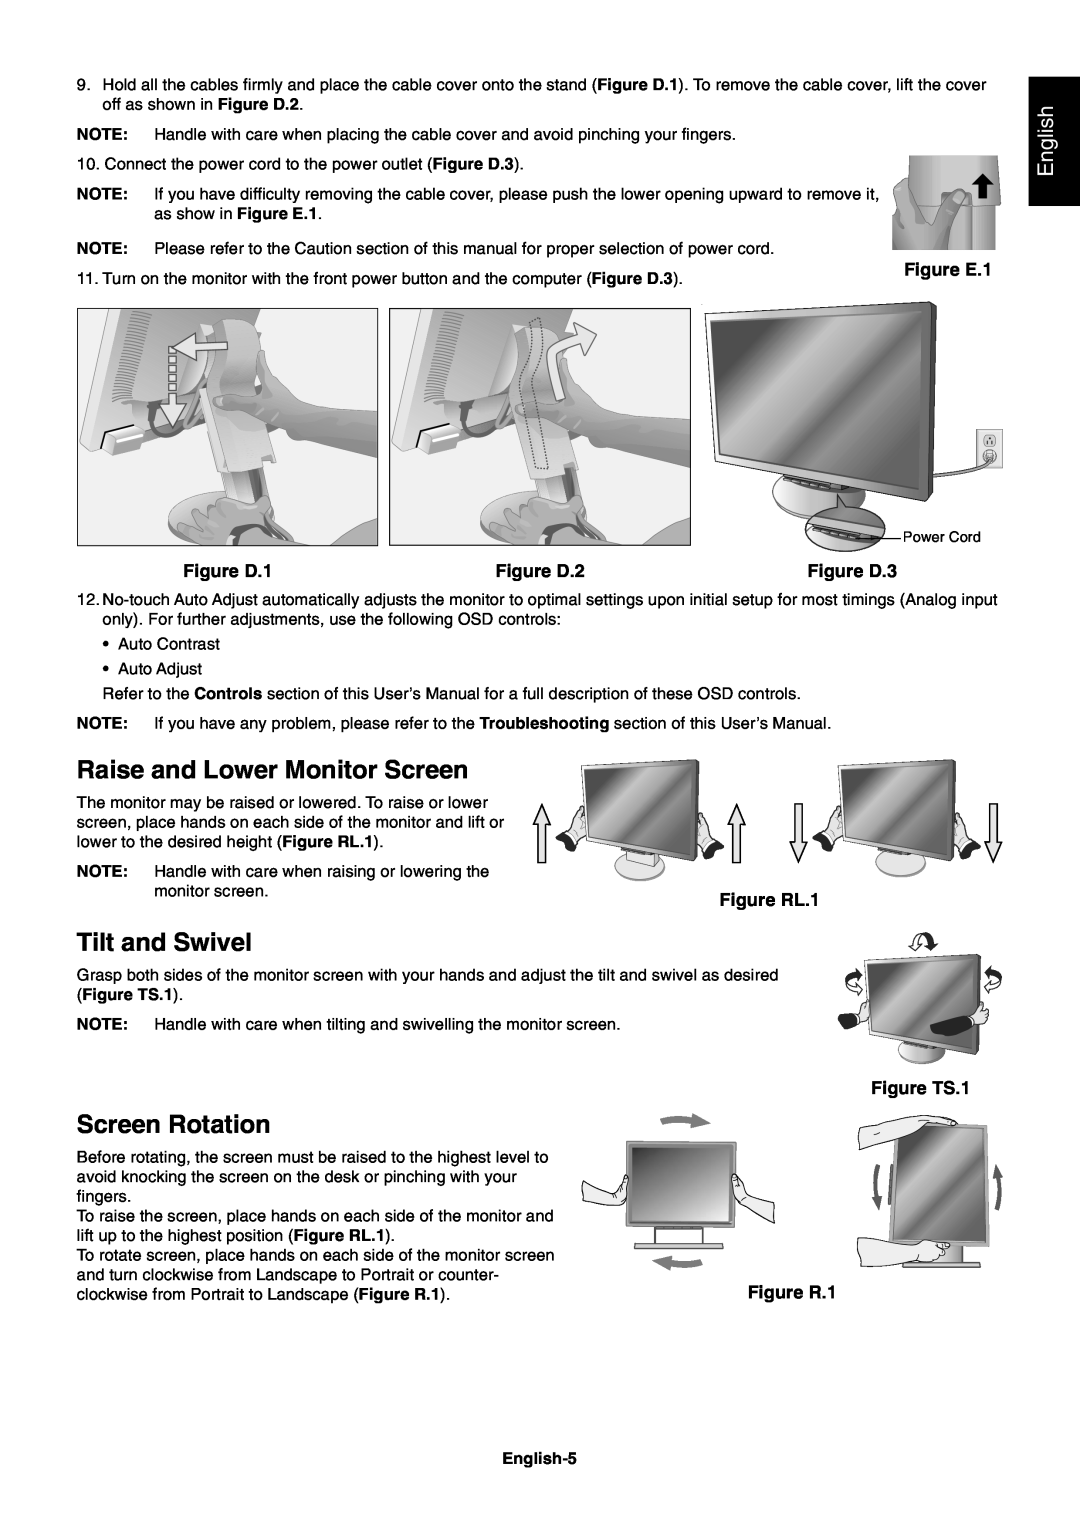 NEC LCD225WNXM Raise and Lower Monitor Screen, Tilt and Swivel, Screen Rotation, English, Figure E.1, Figure D.1 